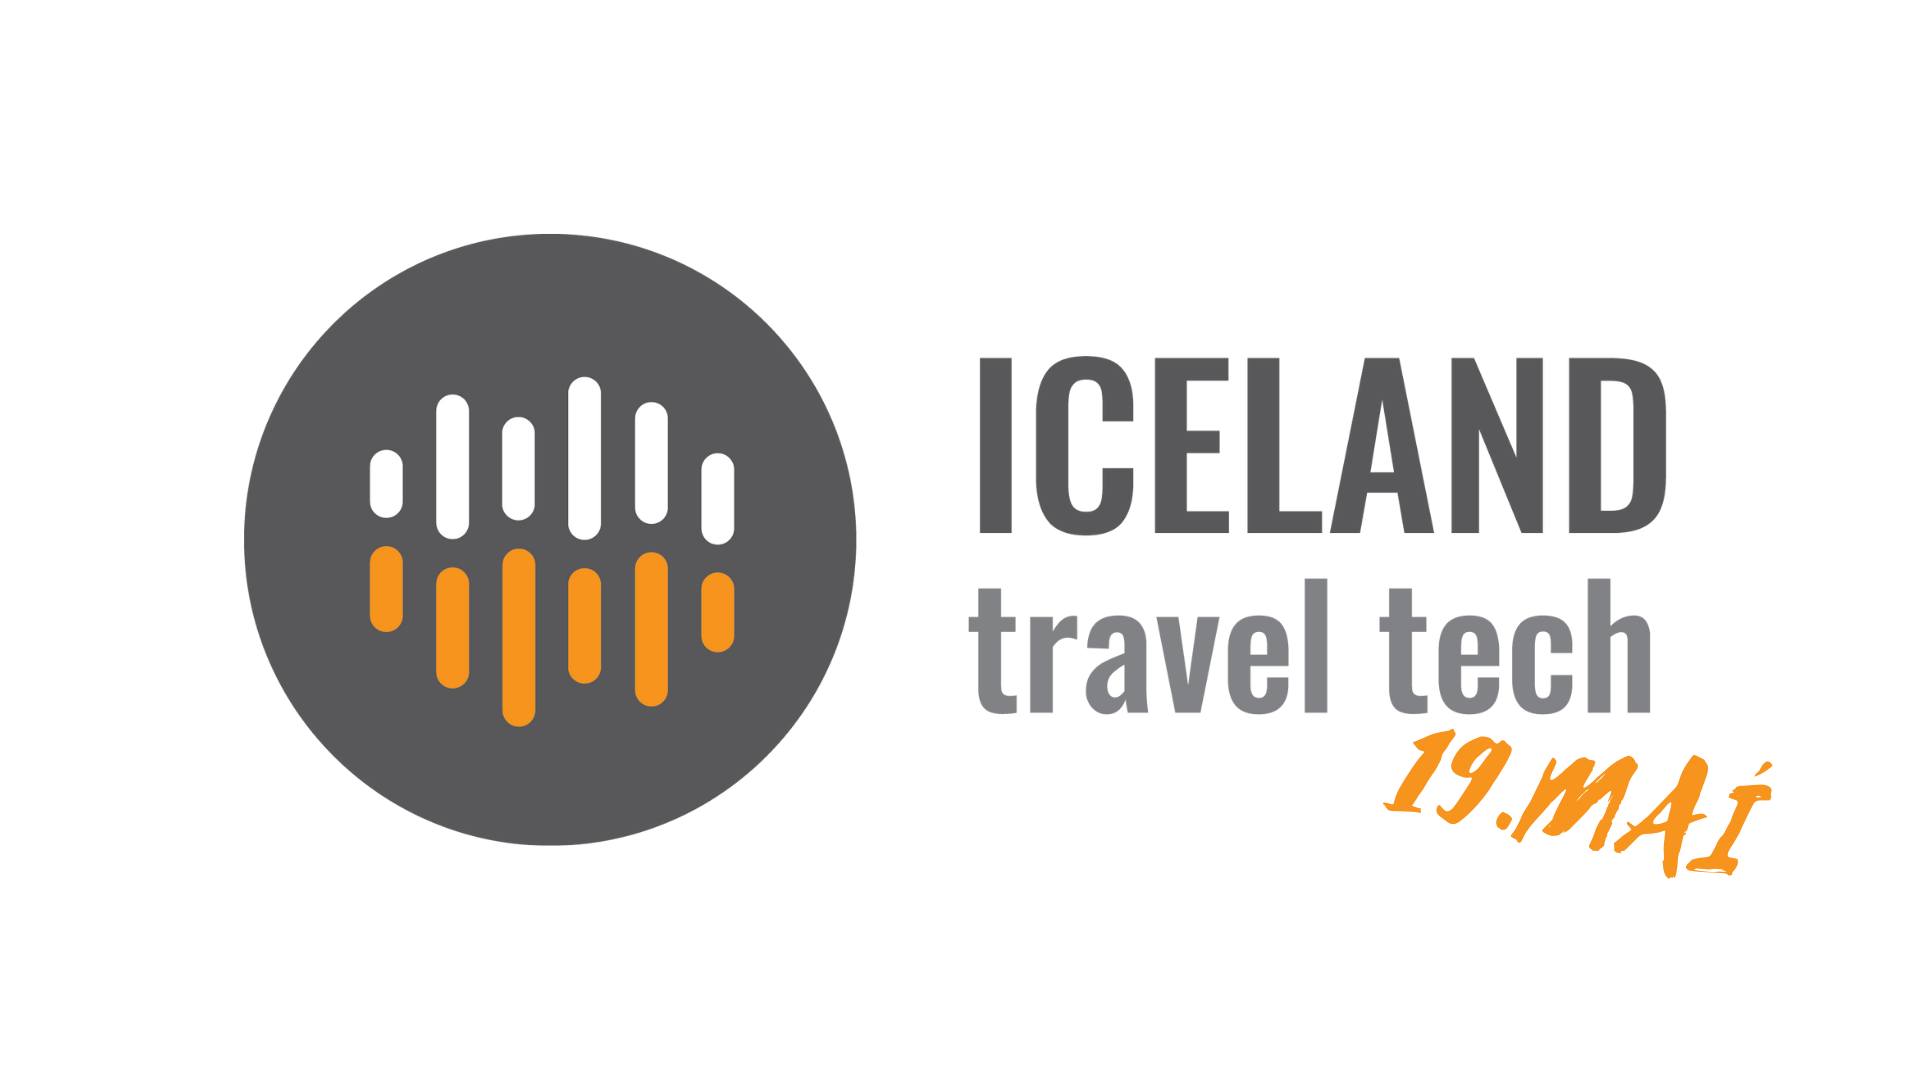 Iceland travel tech